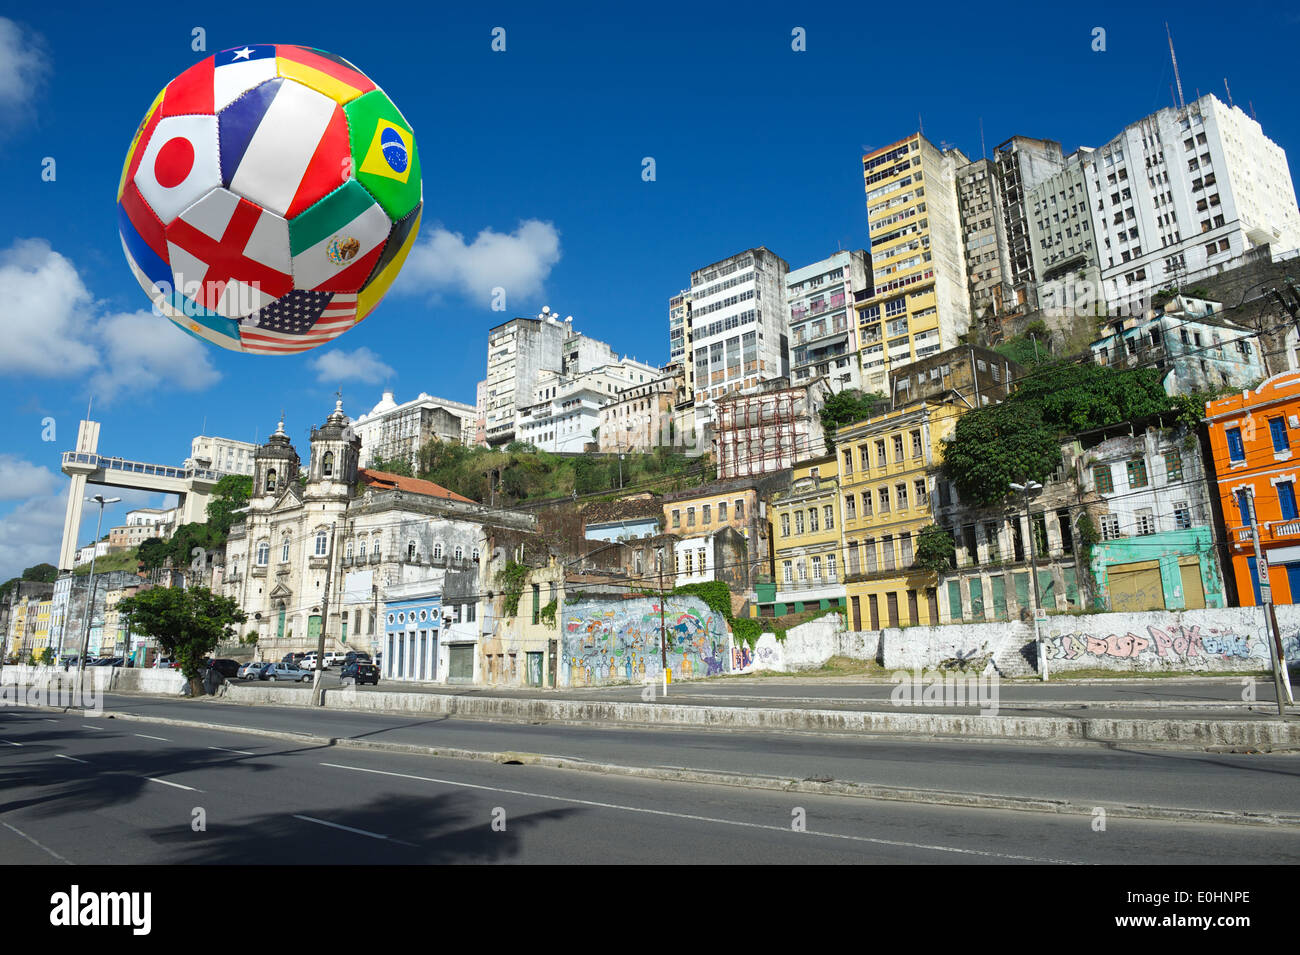 International football soccer ball flying in the sky above Salvador Bahia Brazil city skyline Stock Photo